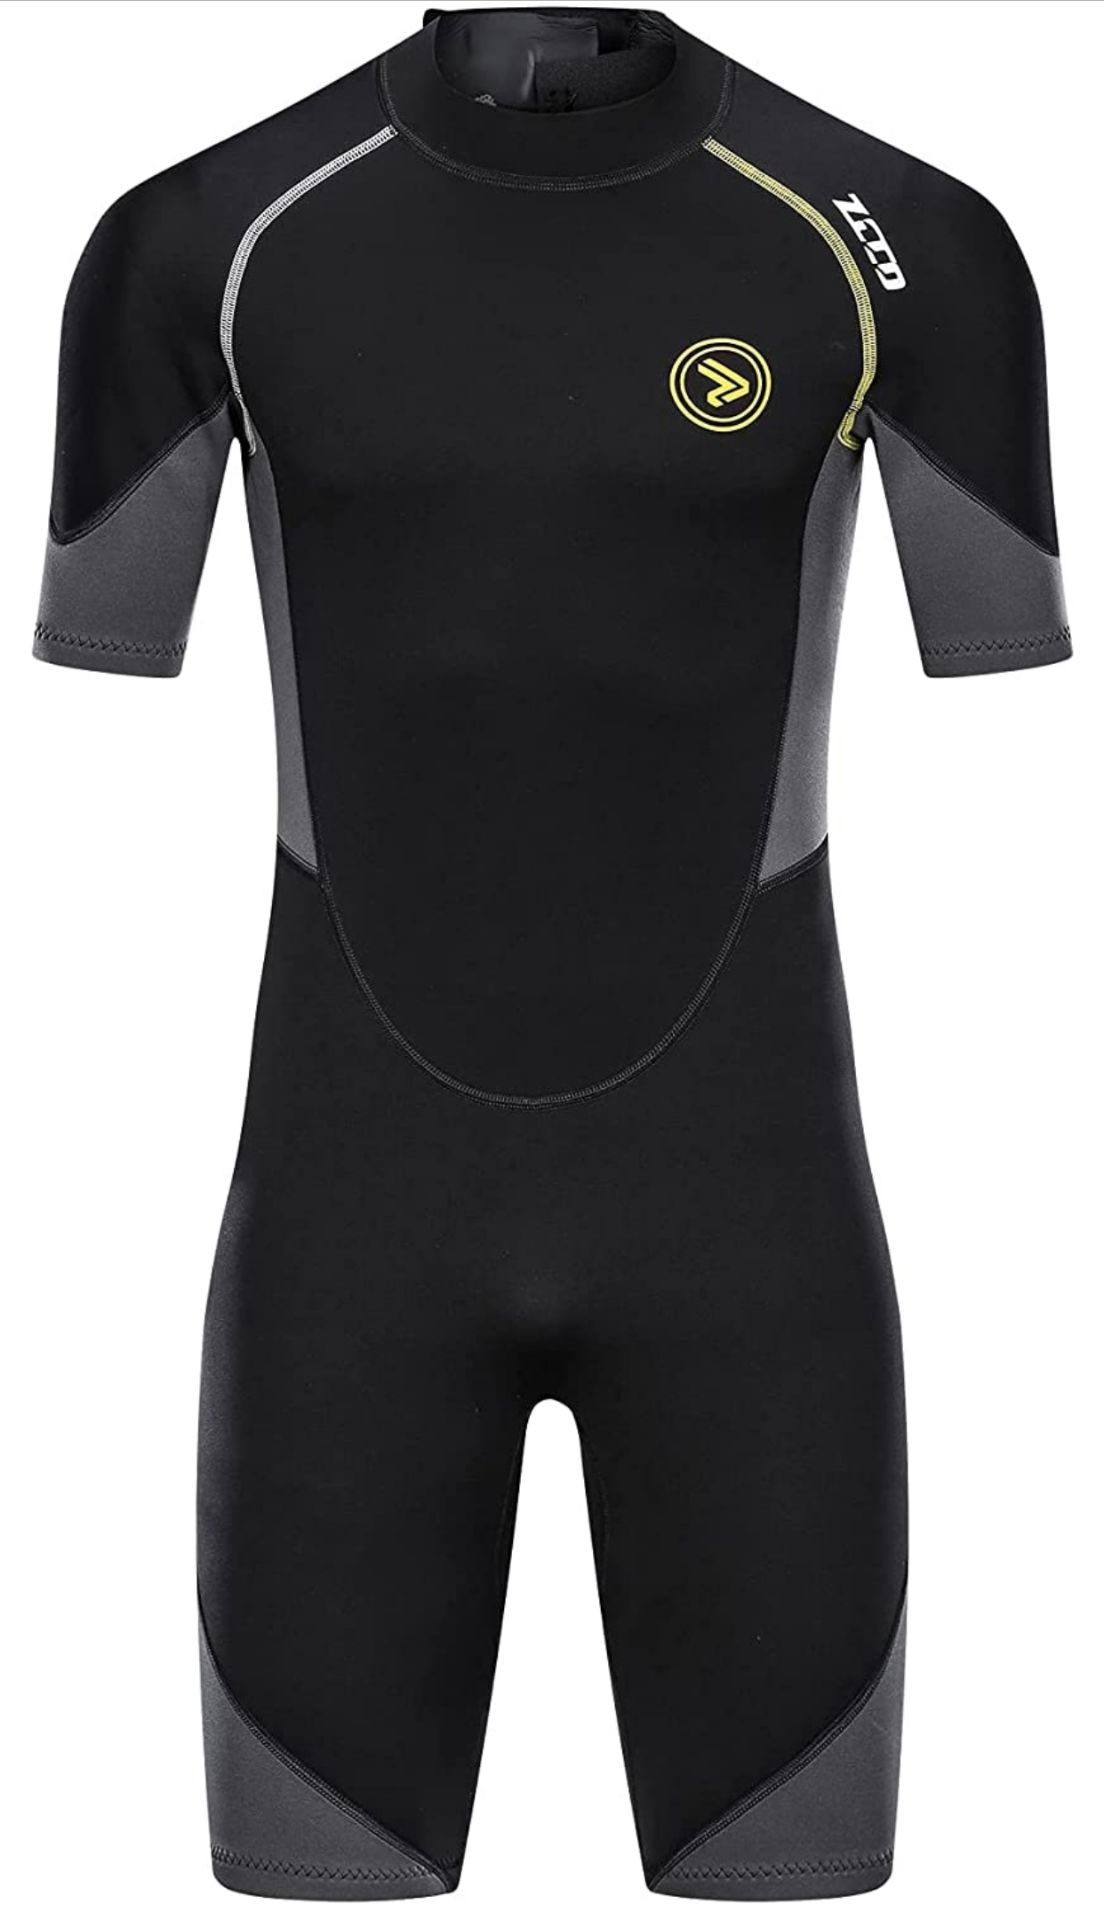 ZCCO Men's Shorty Wetsuit Premium Neoprene for Scuba Diving Snorkeling, XL RRP £34.99